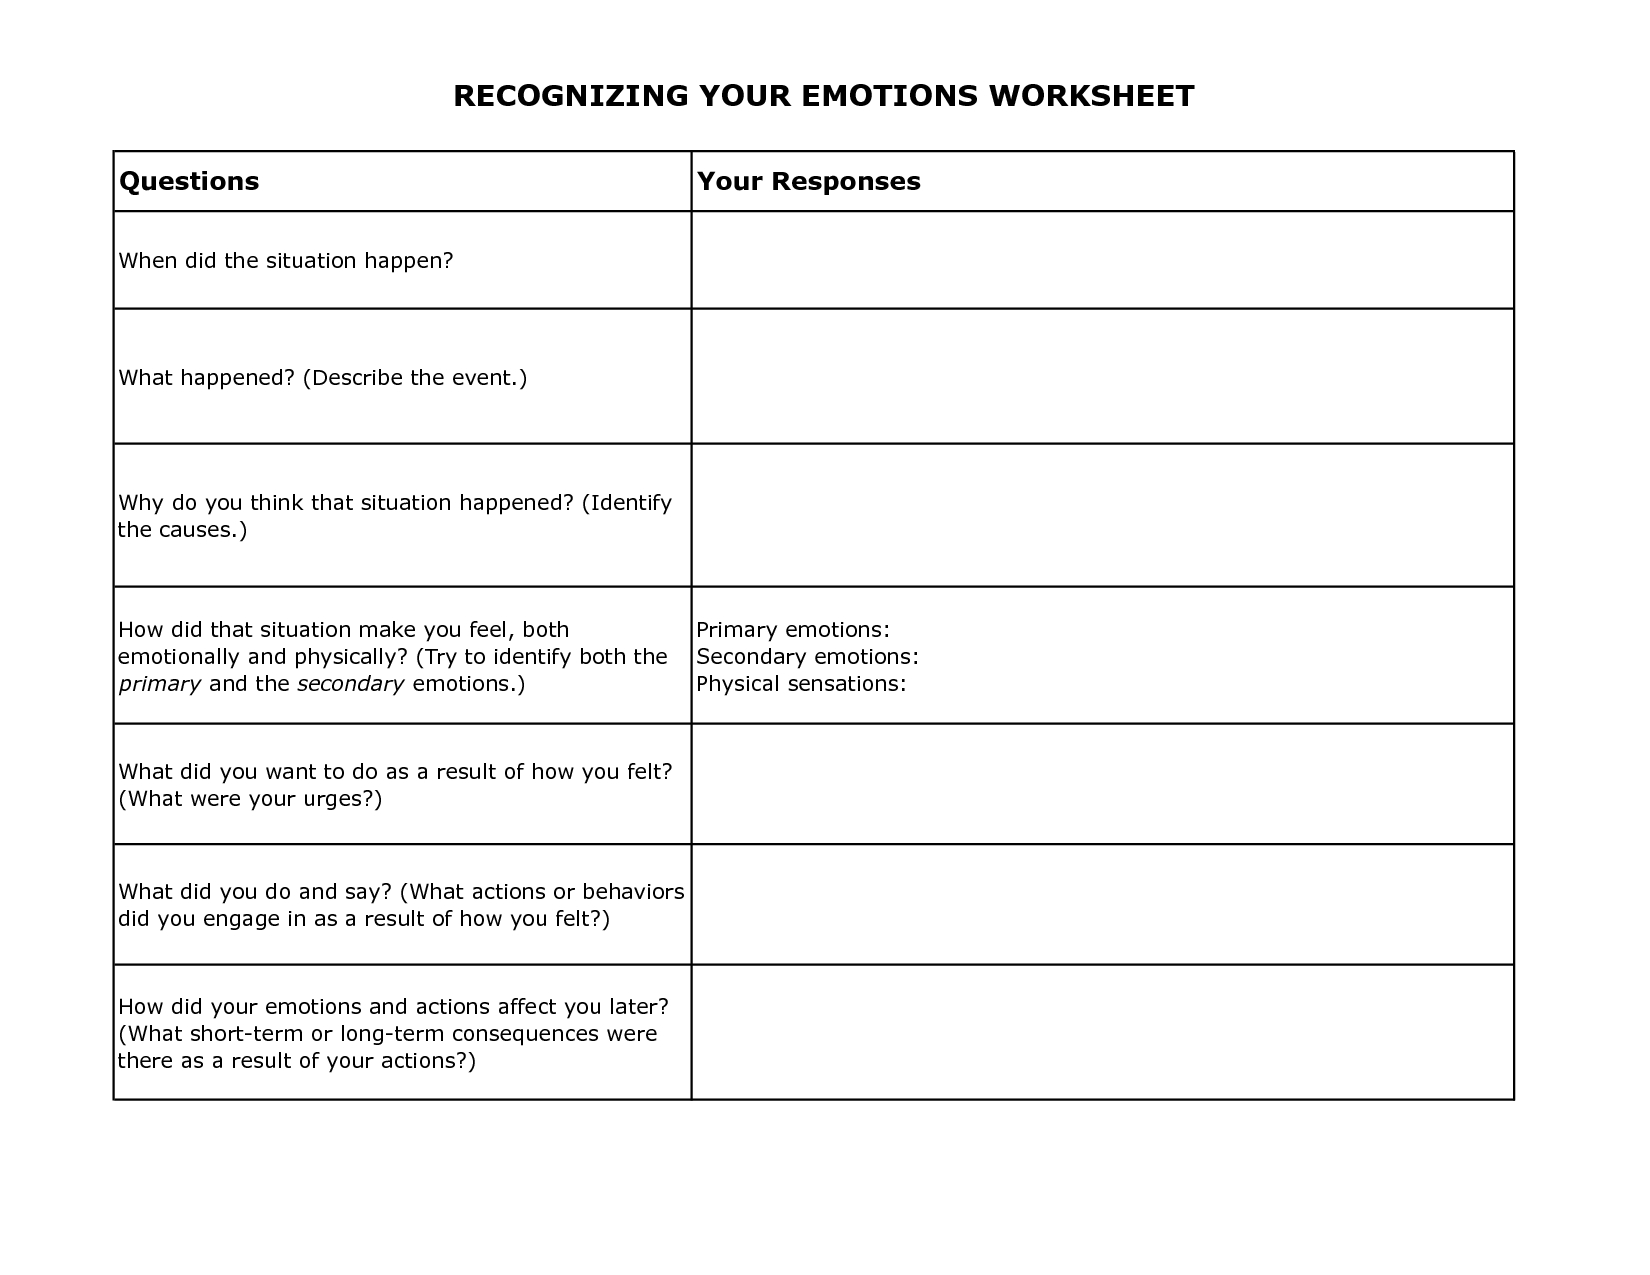 Free Printable Dbt Worksheets Decisional Balance Worksheet Pdf